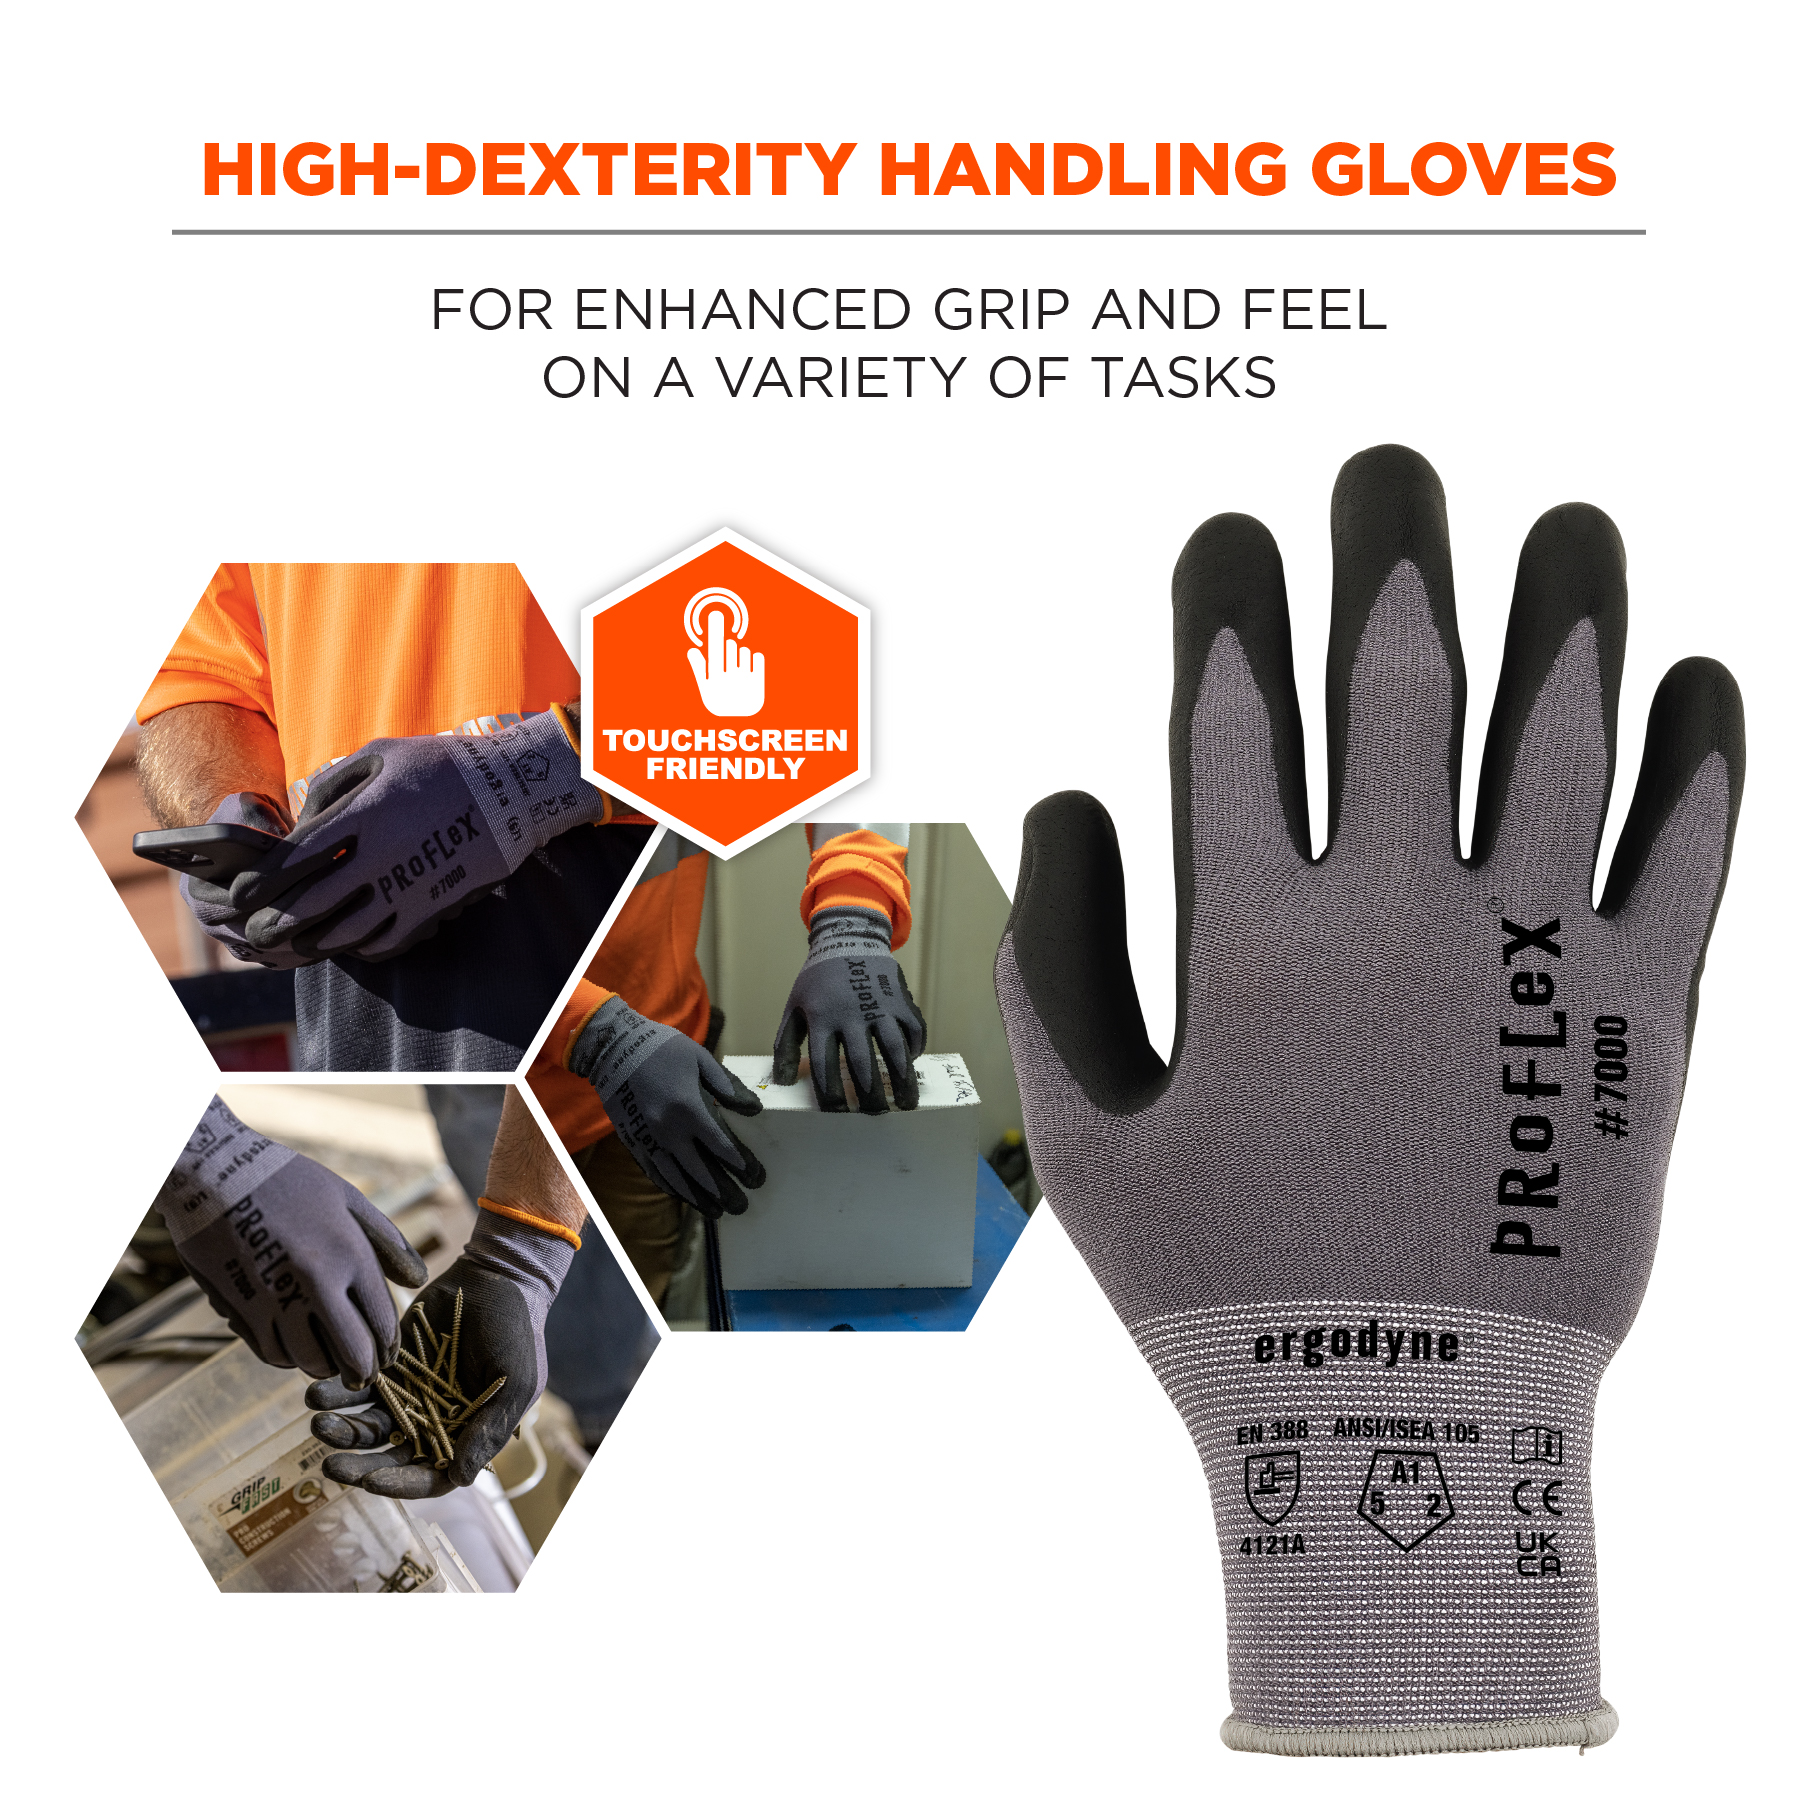 https://www.ergodyne.com/sites/default/files/product-images/10371-7000-nitrile-coated-gloves-microfoam-palm-gray-high-dexterity-handling-gloves_0.jpg